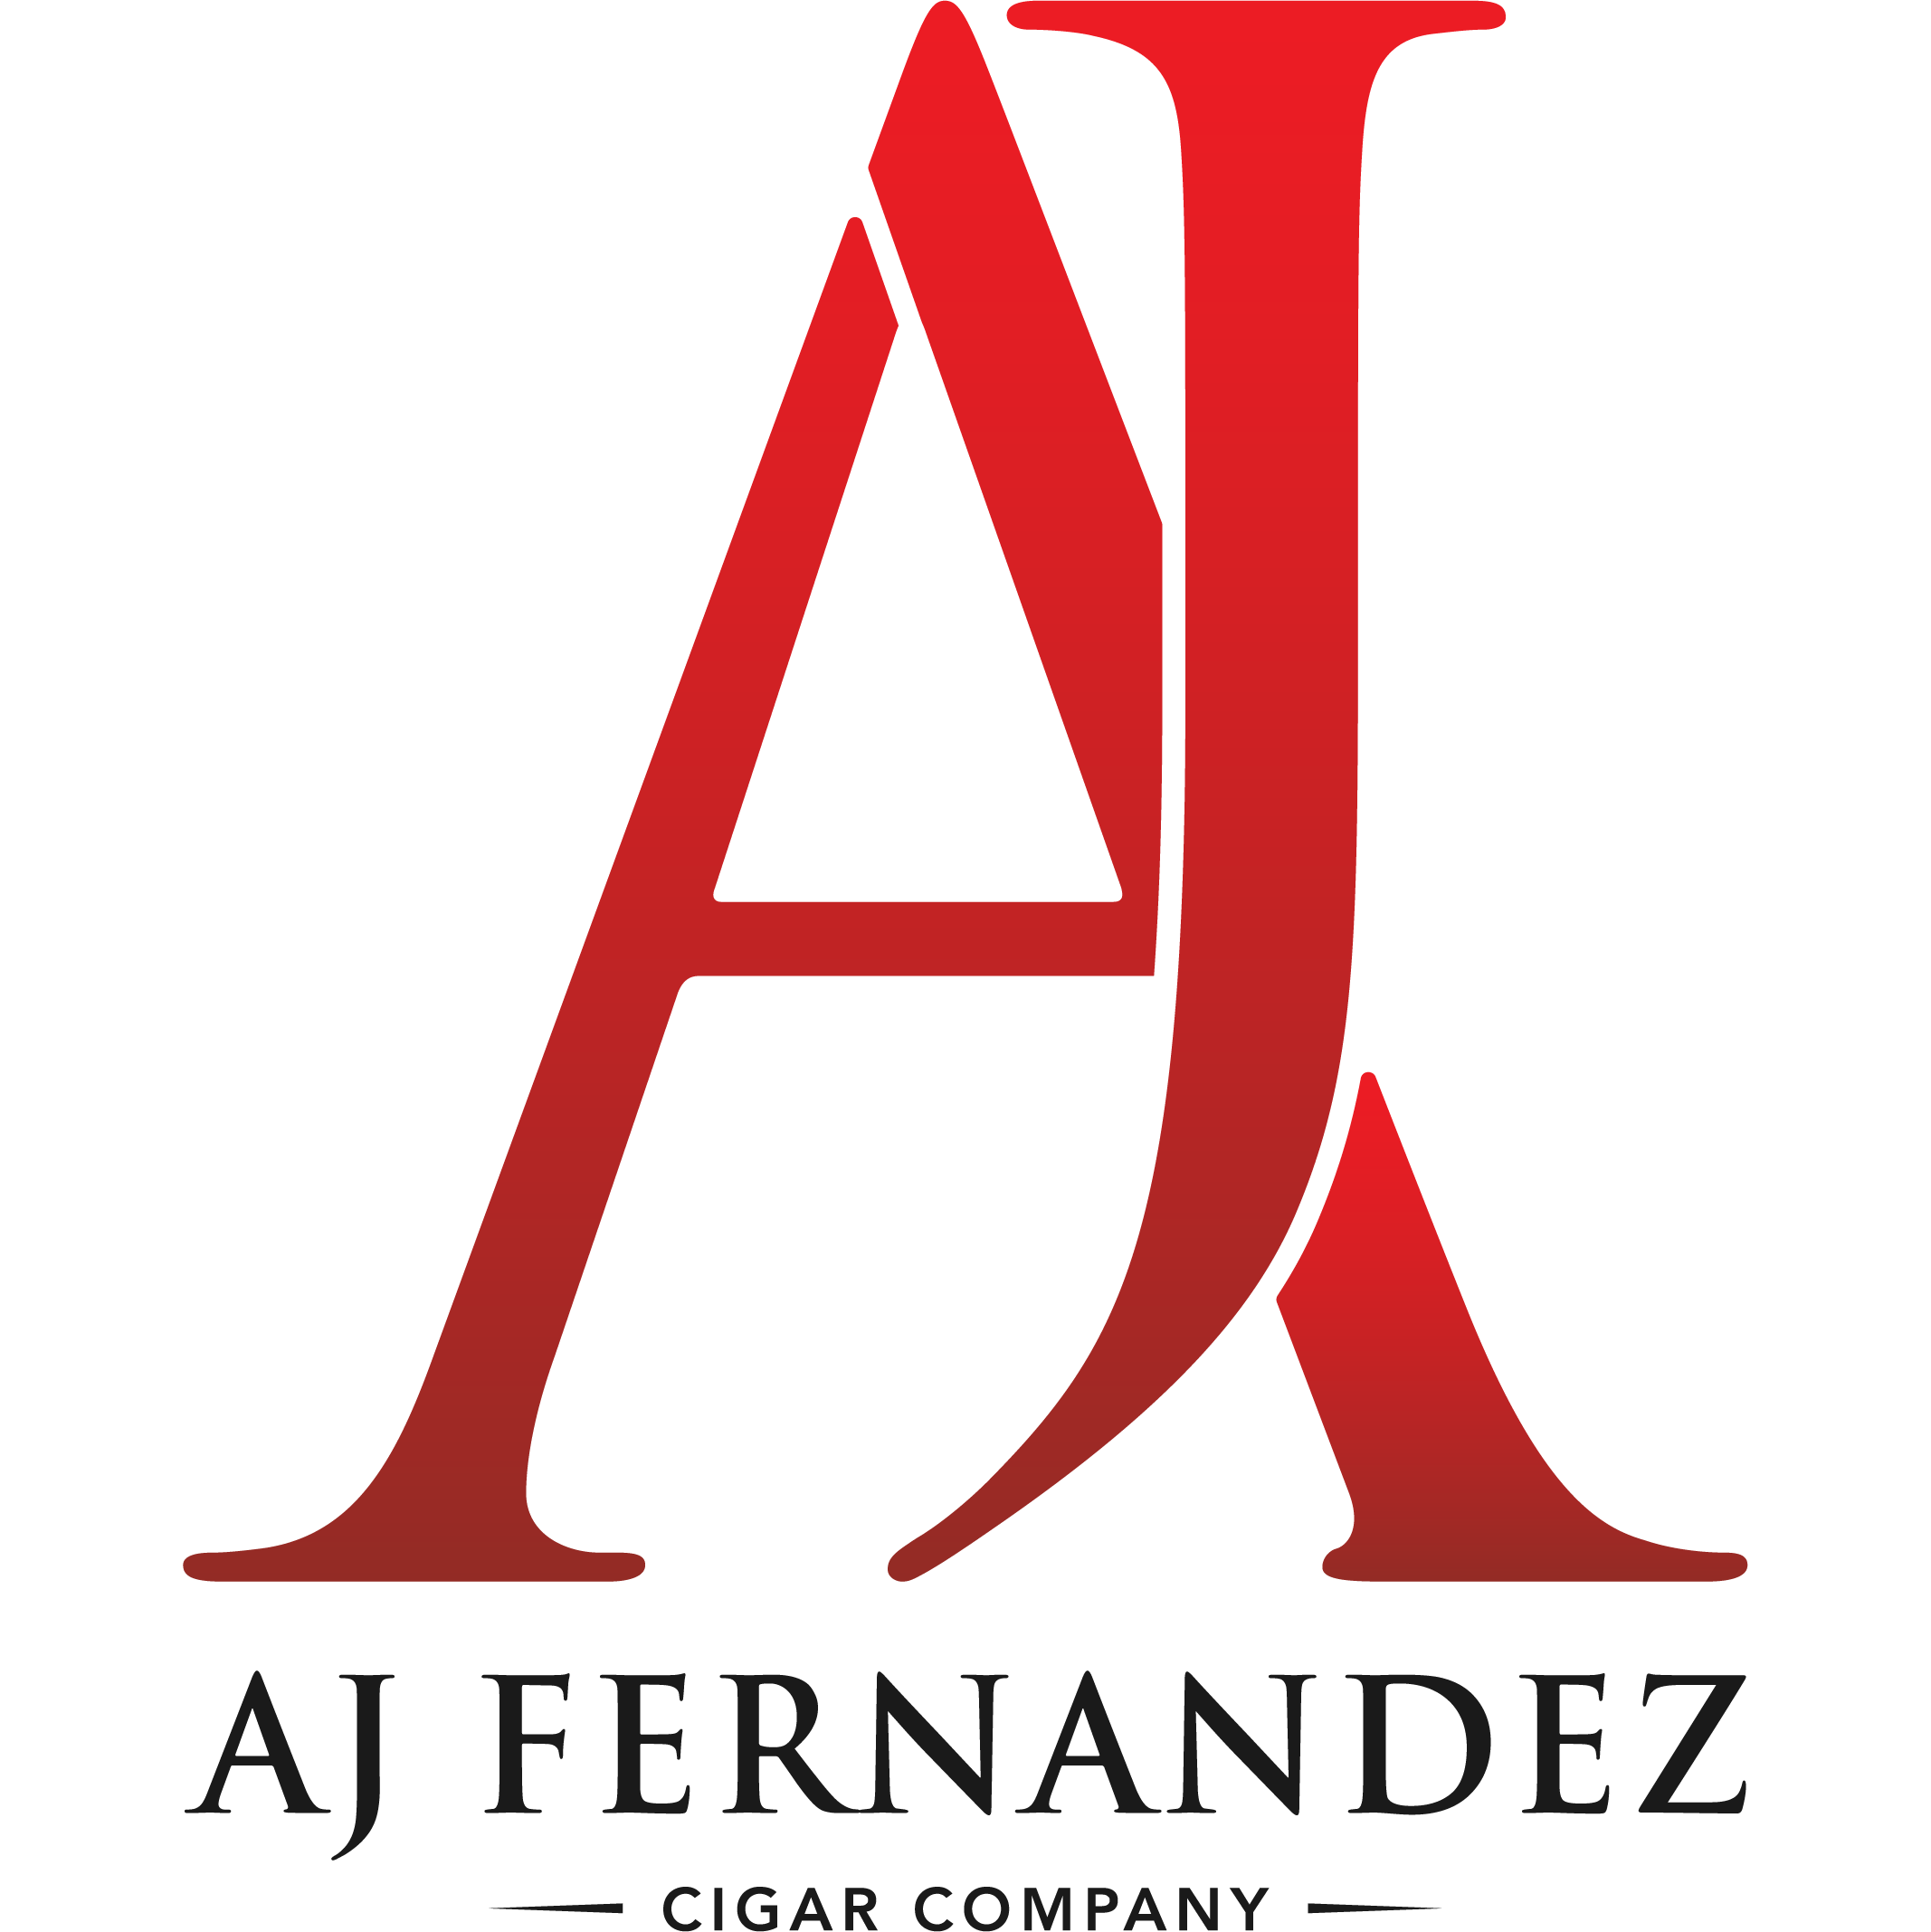 Aj Fernandez Cigars Generations Of Tobacco Mastery